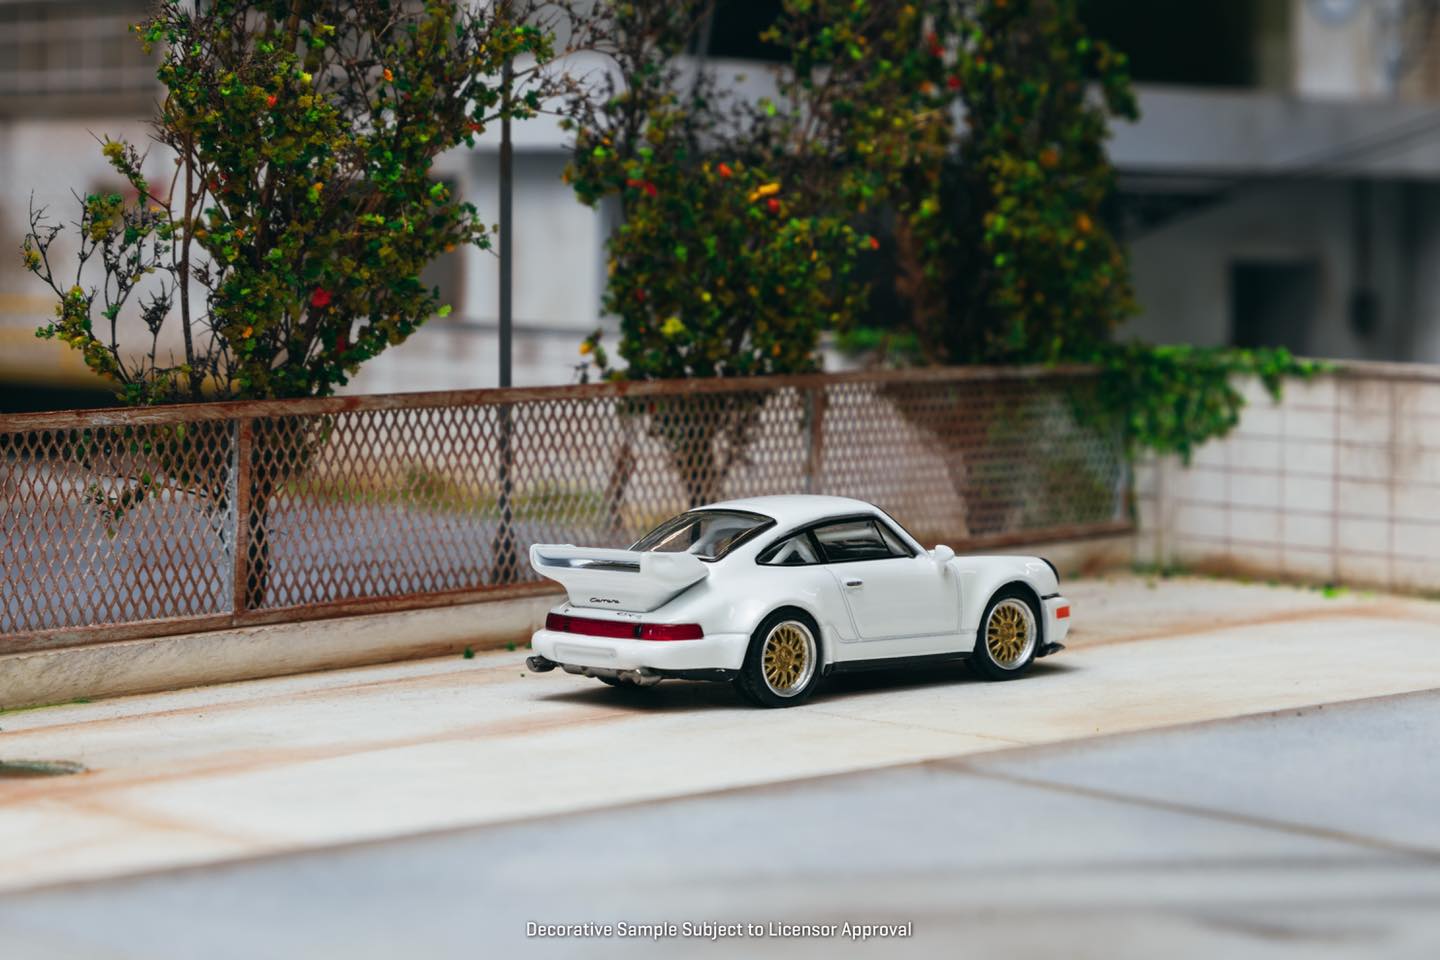 Schuco Tarmac Works Porsche 911 RSR 3.8 White 1:64